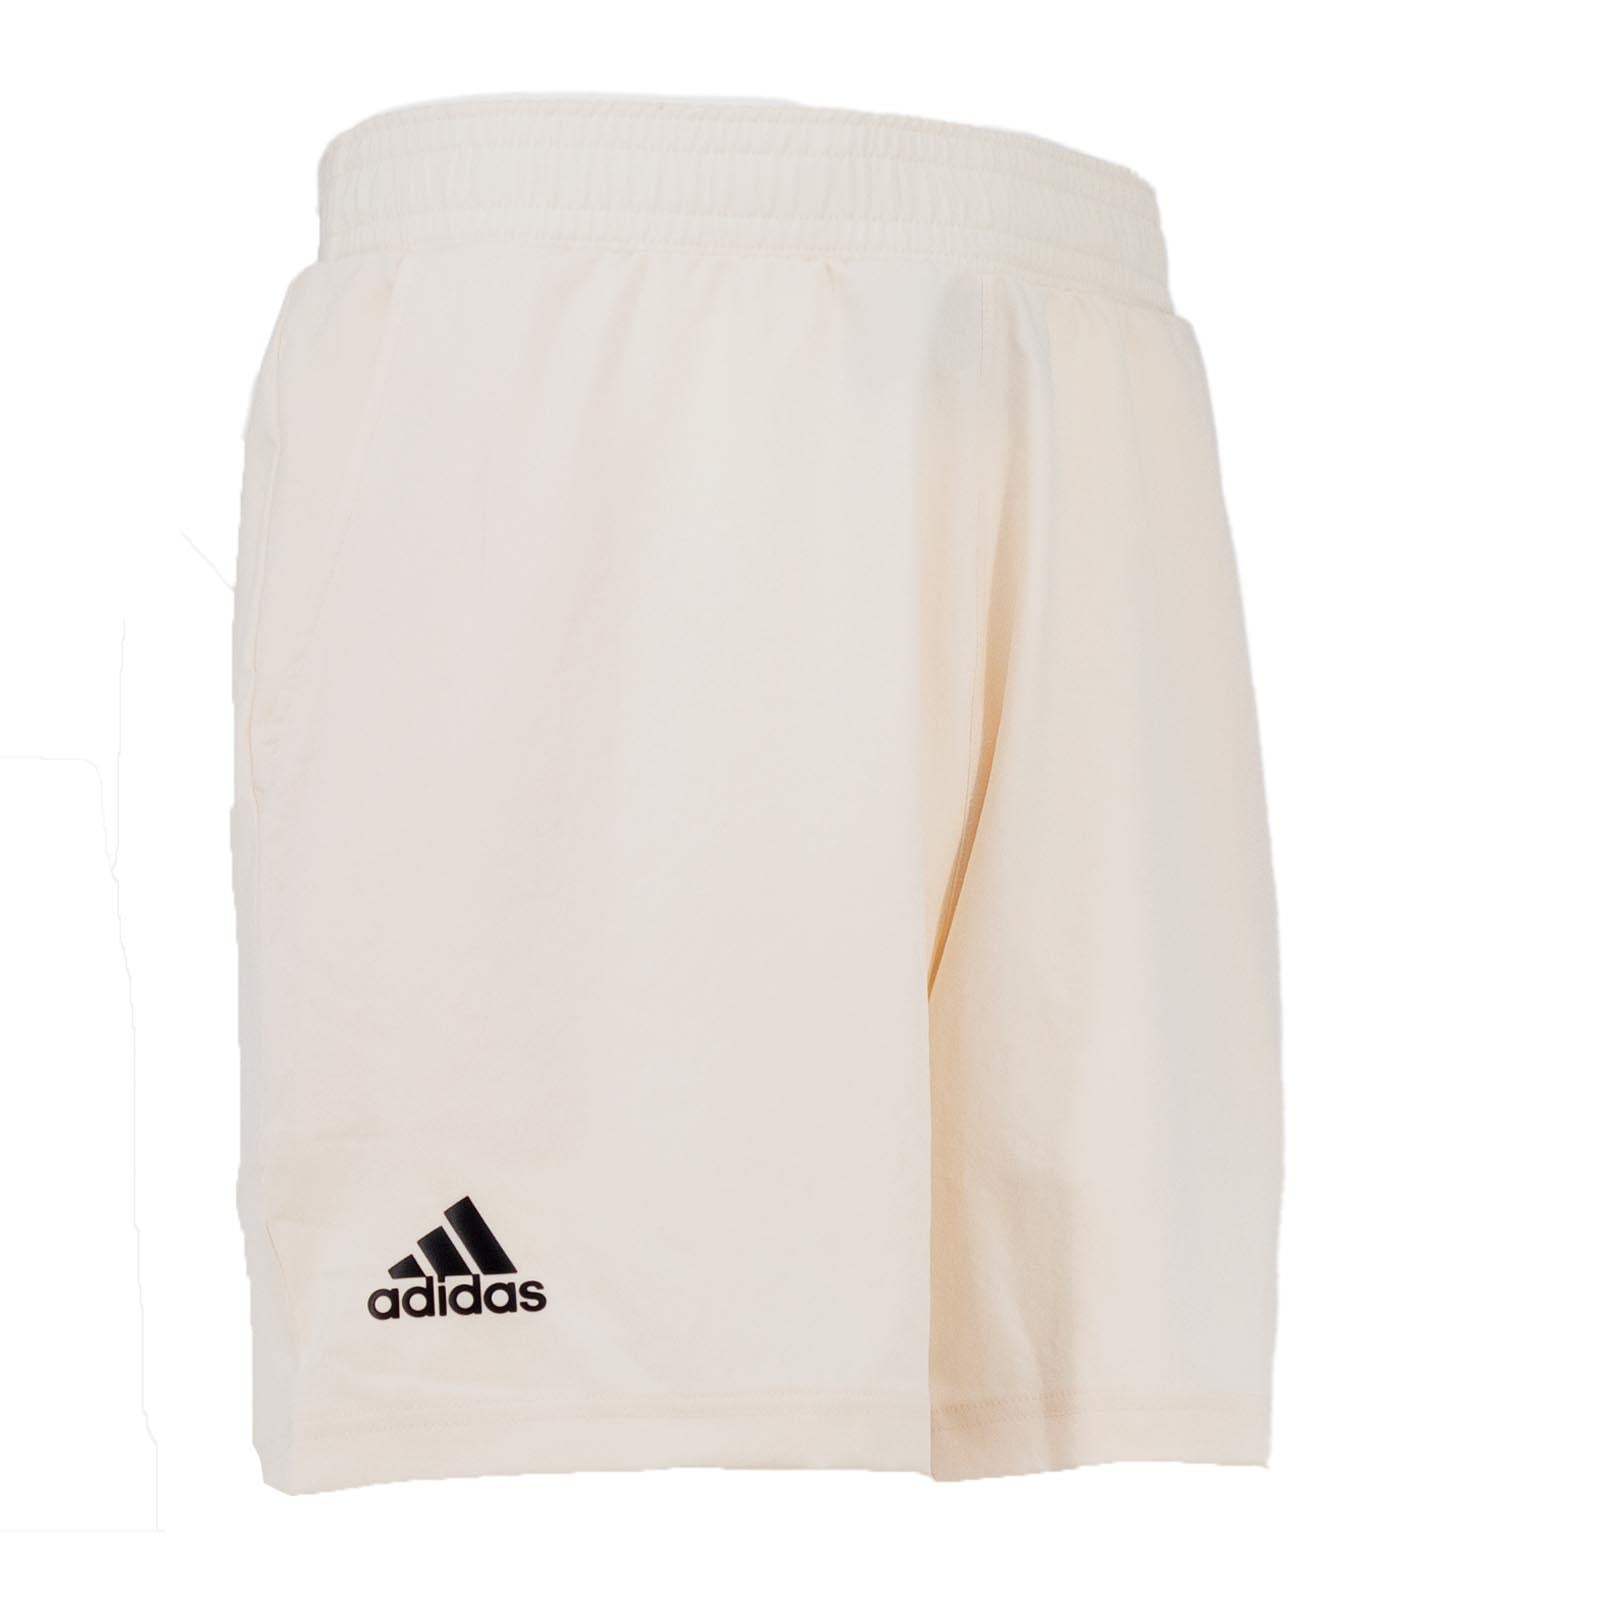 Adidas Tennis Ergo PB Primeblue Shorts kurze Hose Taschen Herren beige H31378 L